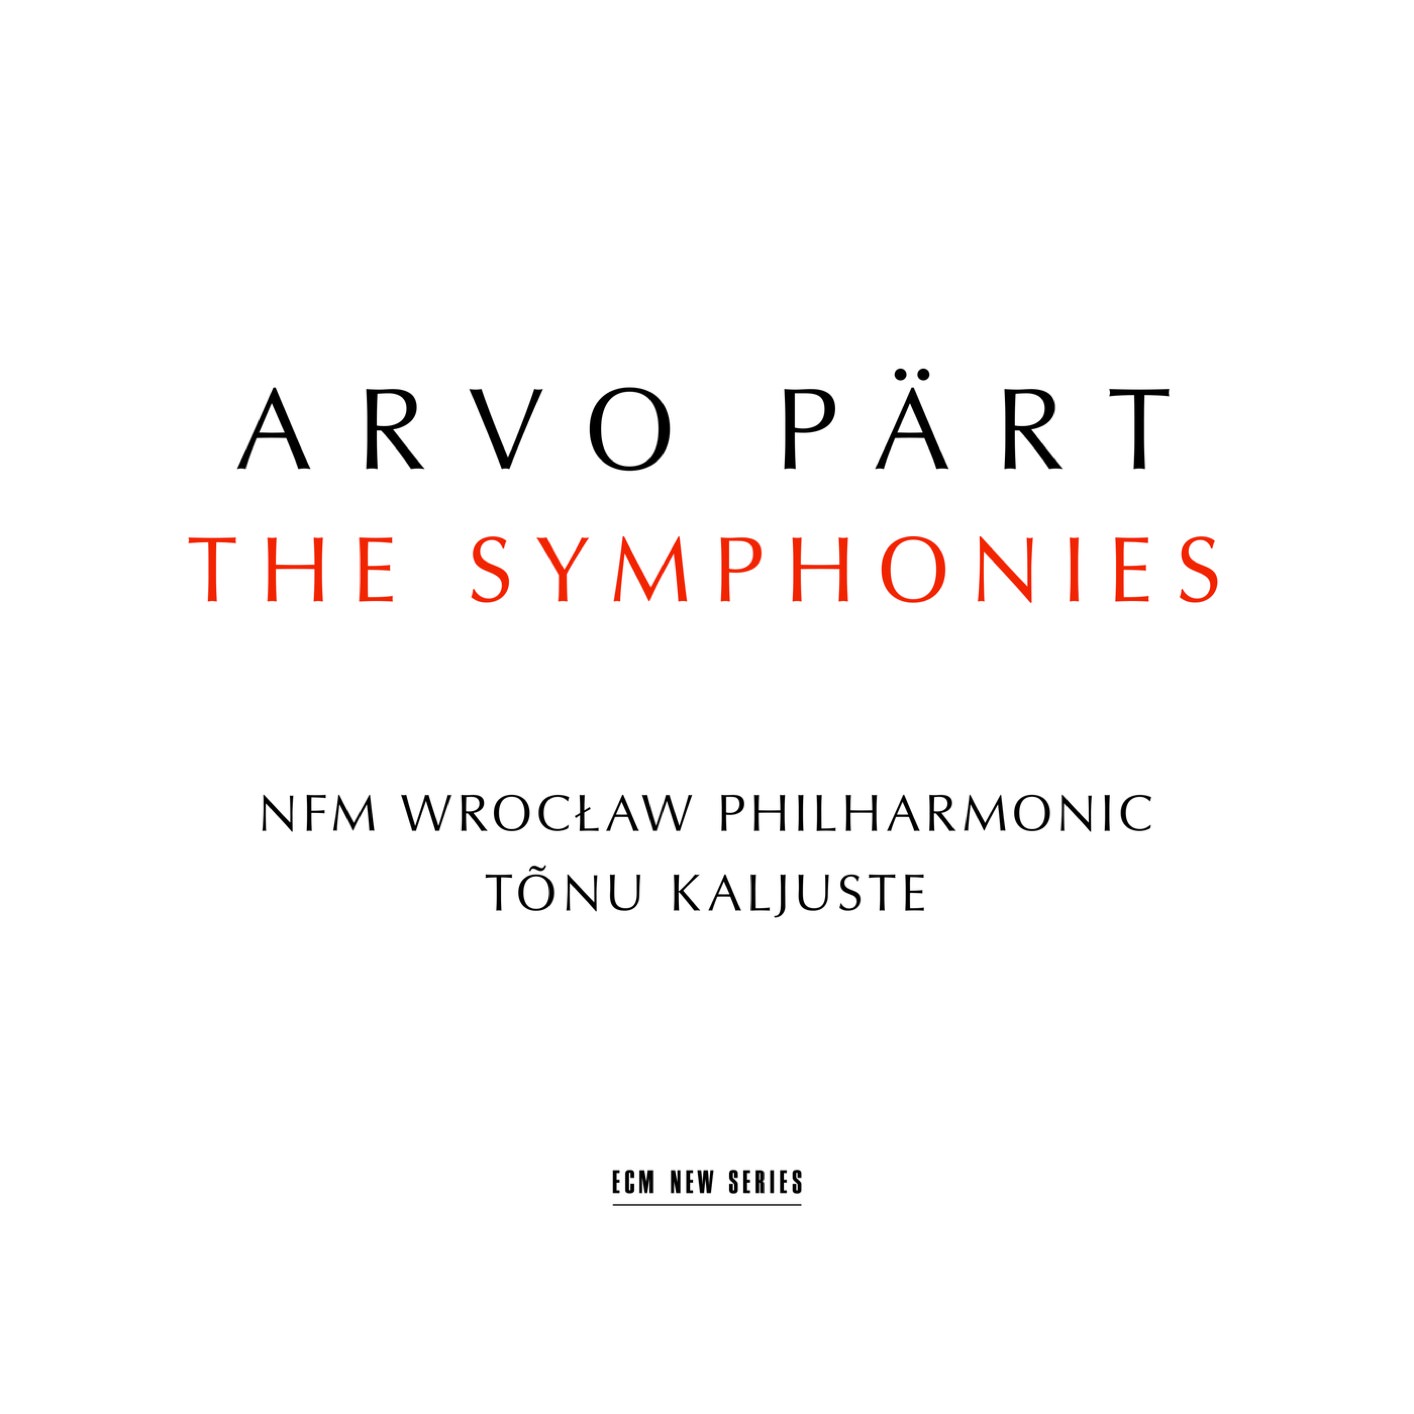 NFM Wroclaw Philharmonic & Tonu Kaljuste - Arvo Part: The Symphonies (2018) [FLAC 24bit/44,1kHz]